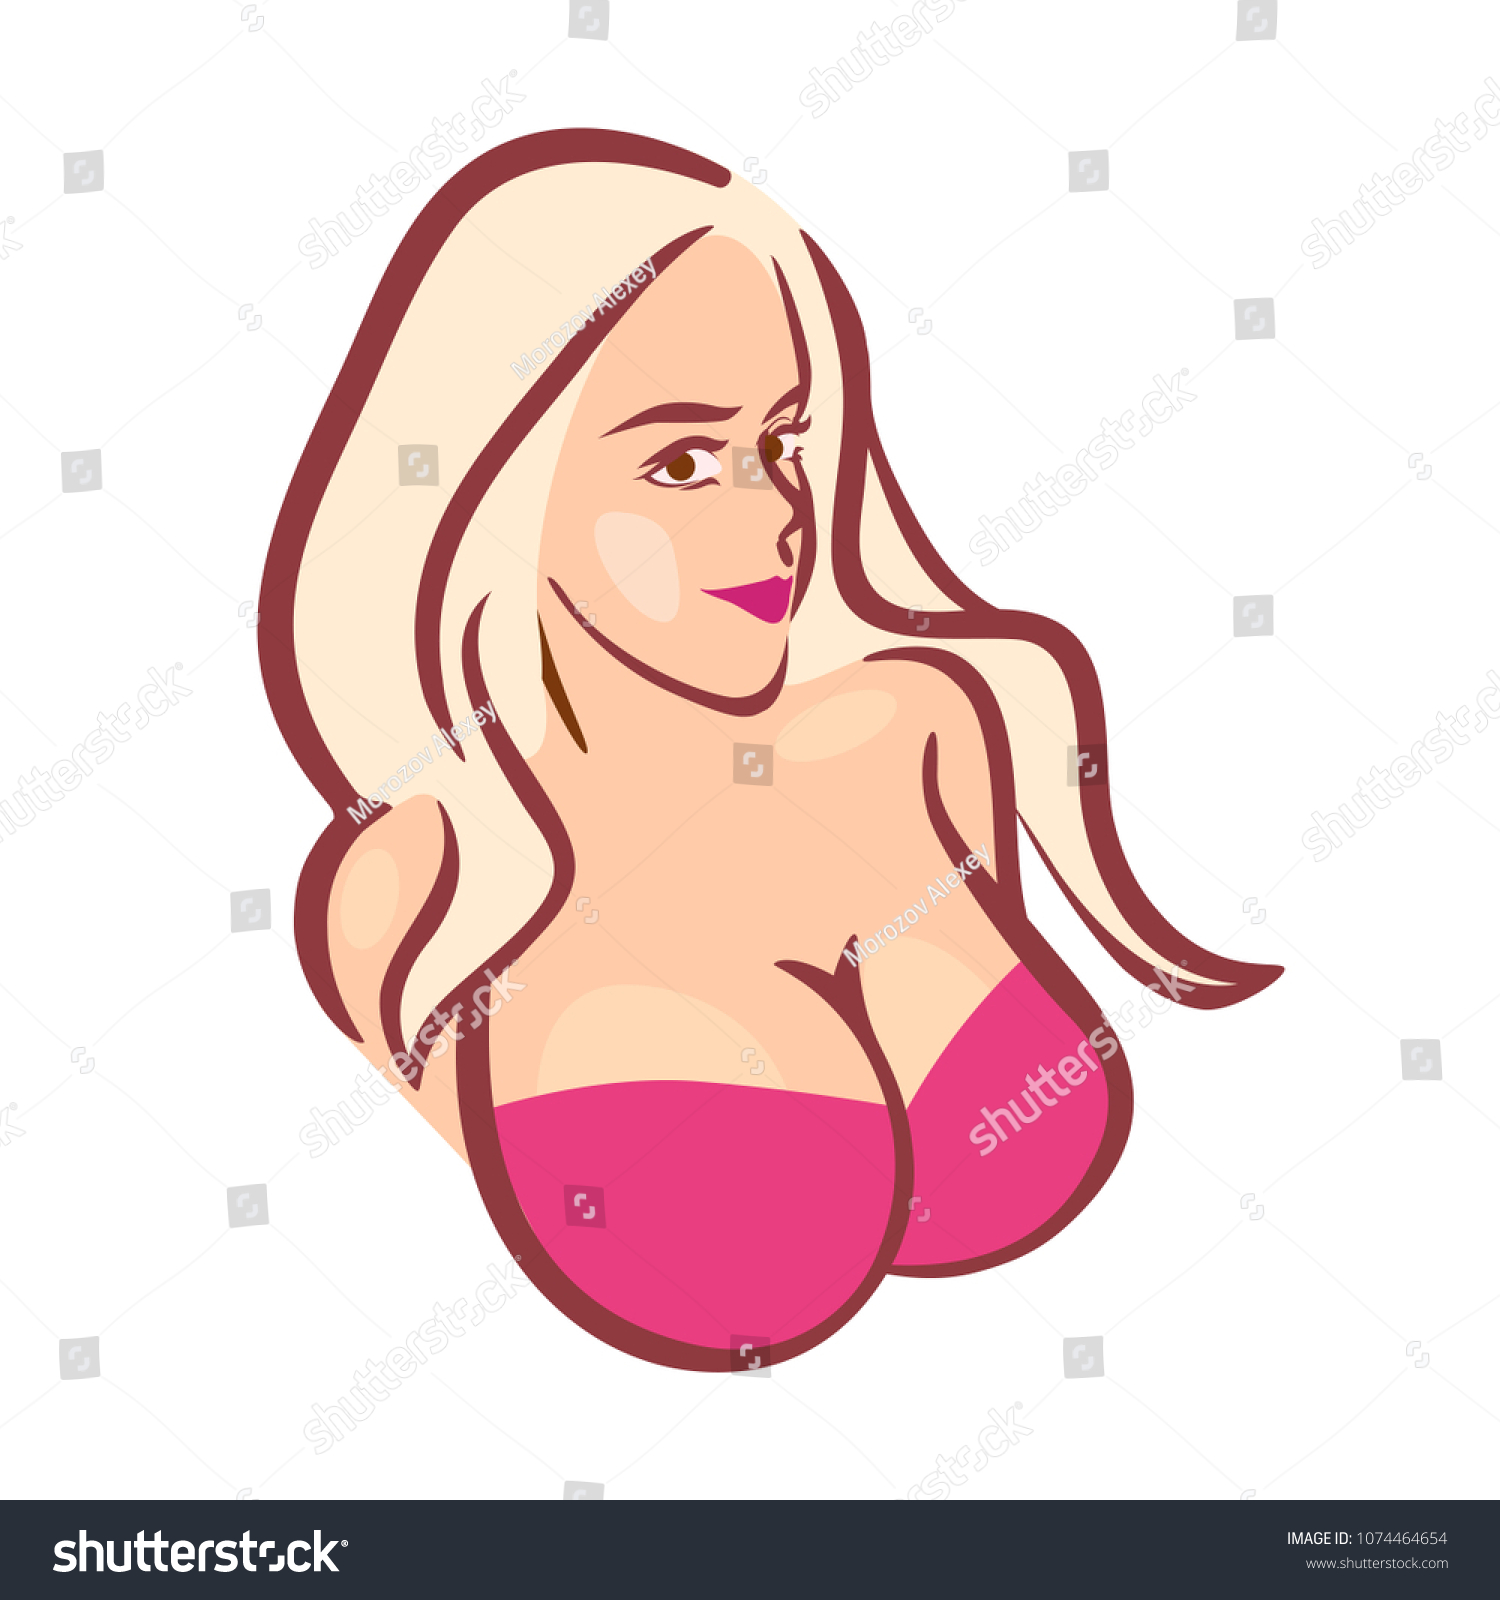 Beautiful Girl Pink Bra Big Boobs Image Vectorielle De Stock Libre De Droits 1074464654